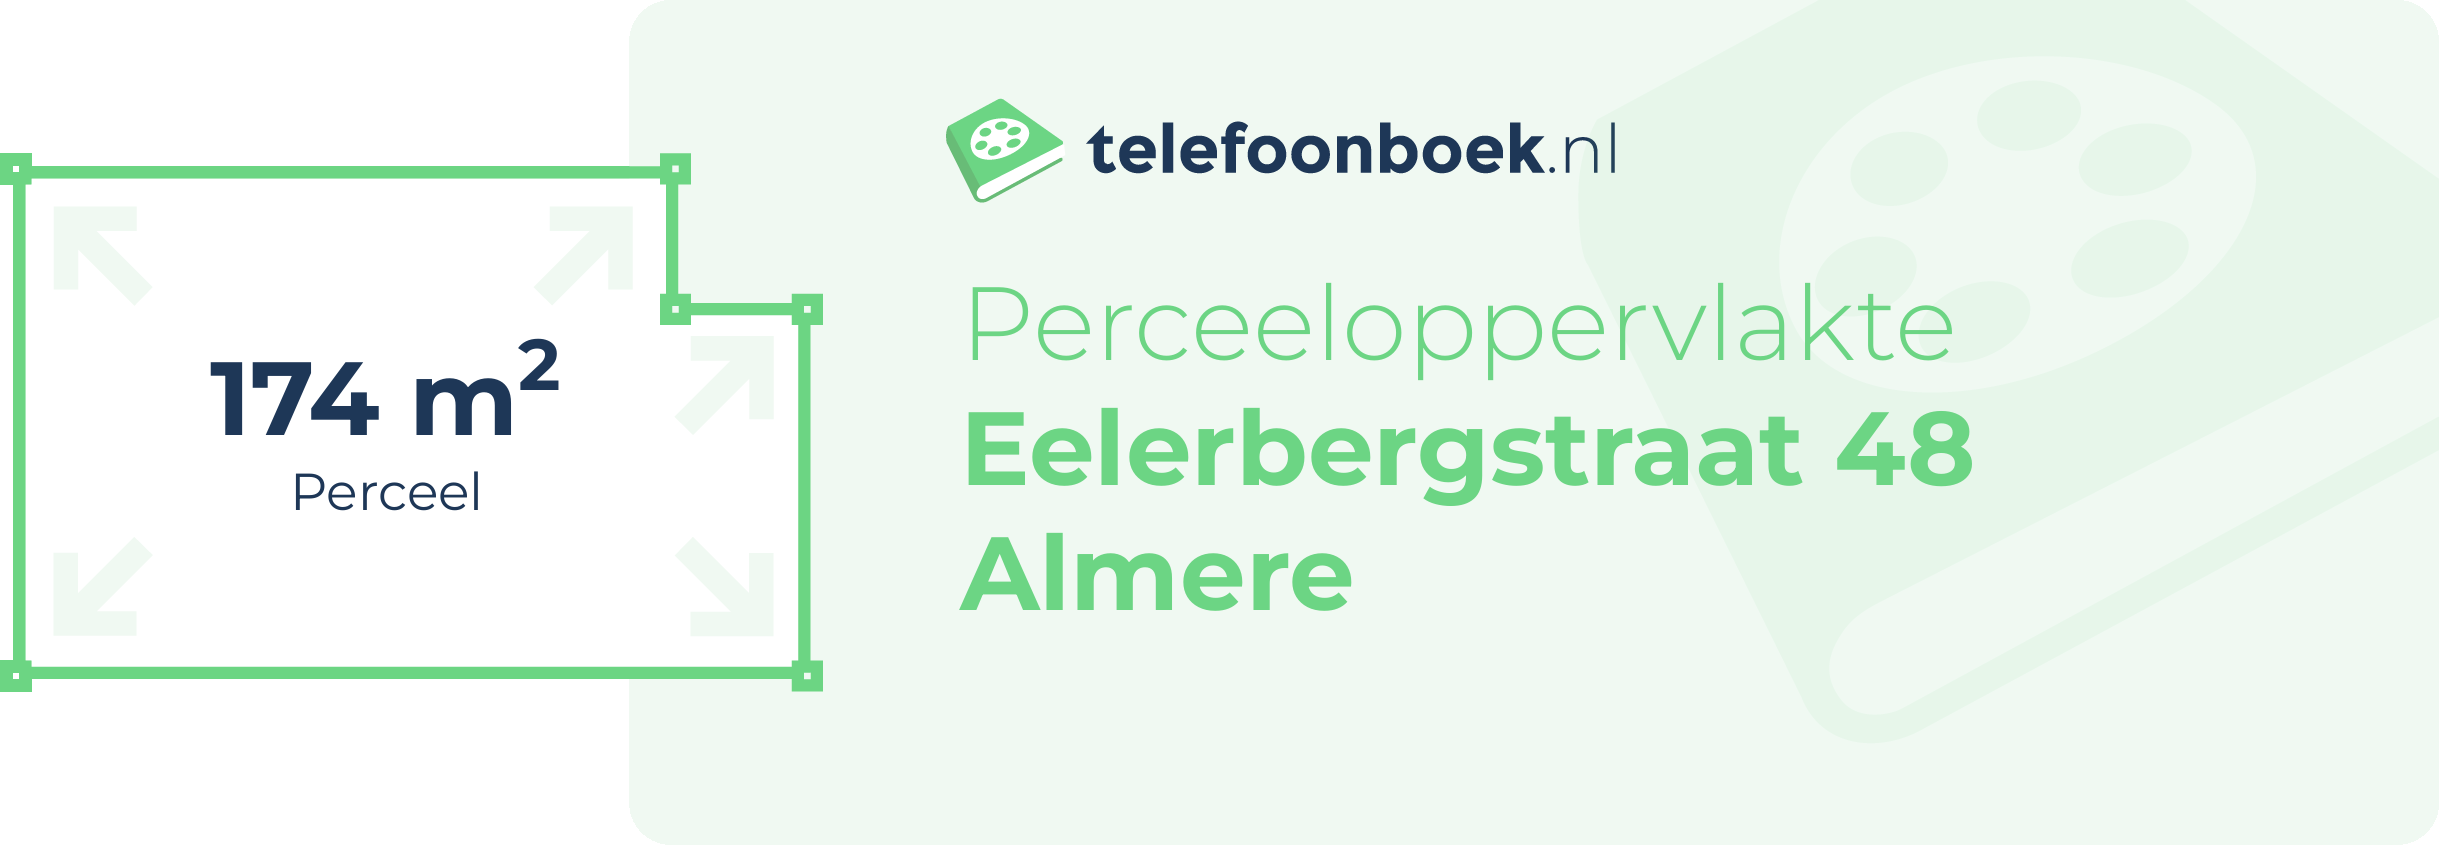 Perceeloppervlakte Eelerbergstraat 48 Almere